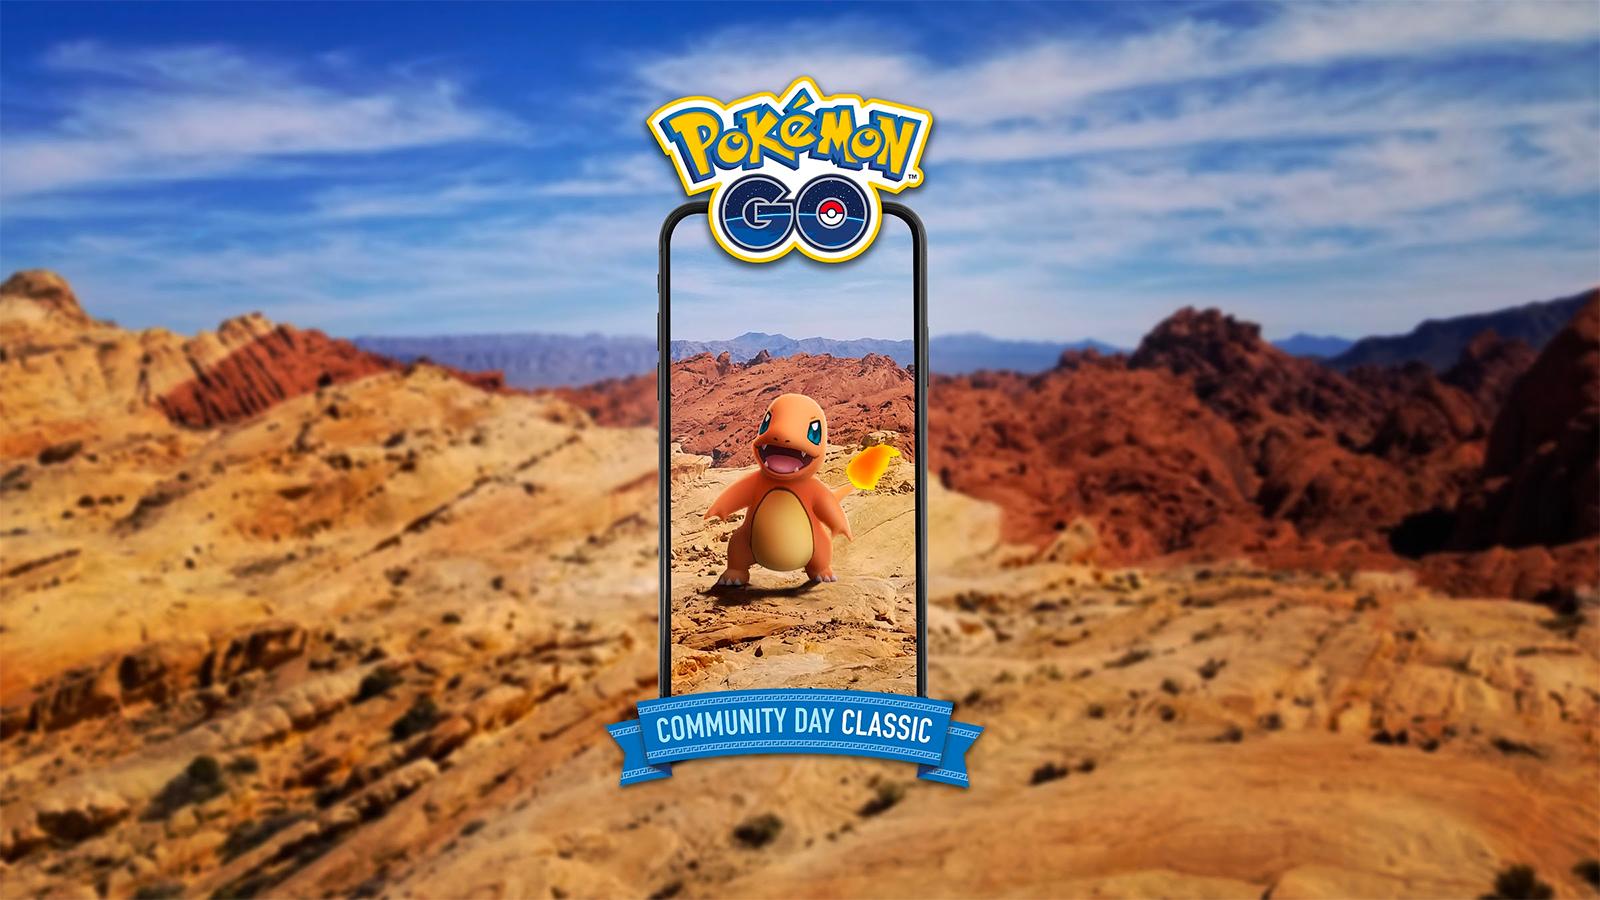 Charmander in the Pokemon Go Community Day Classic event